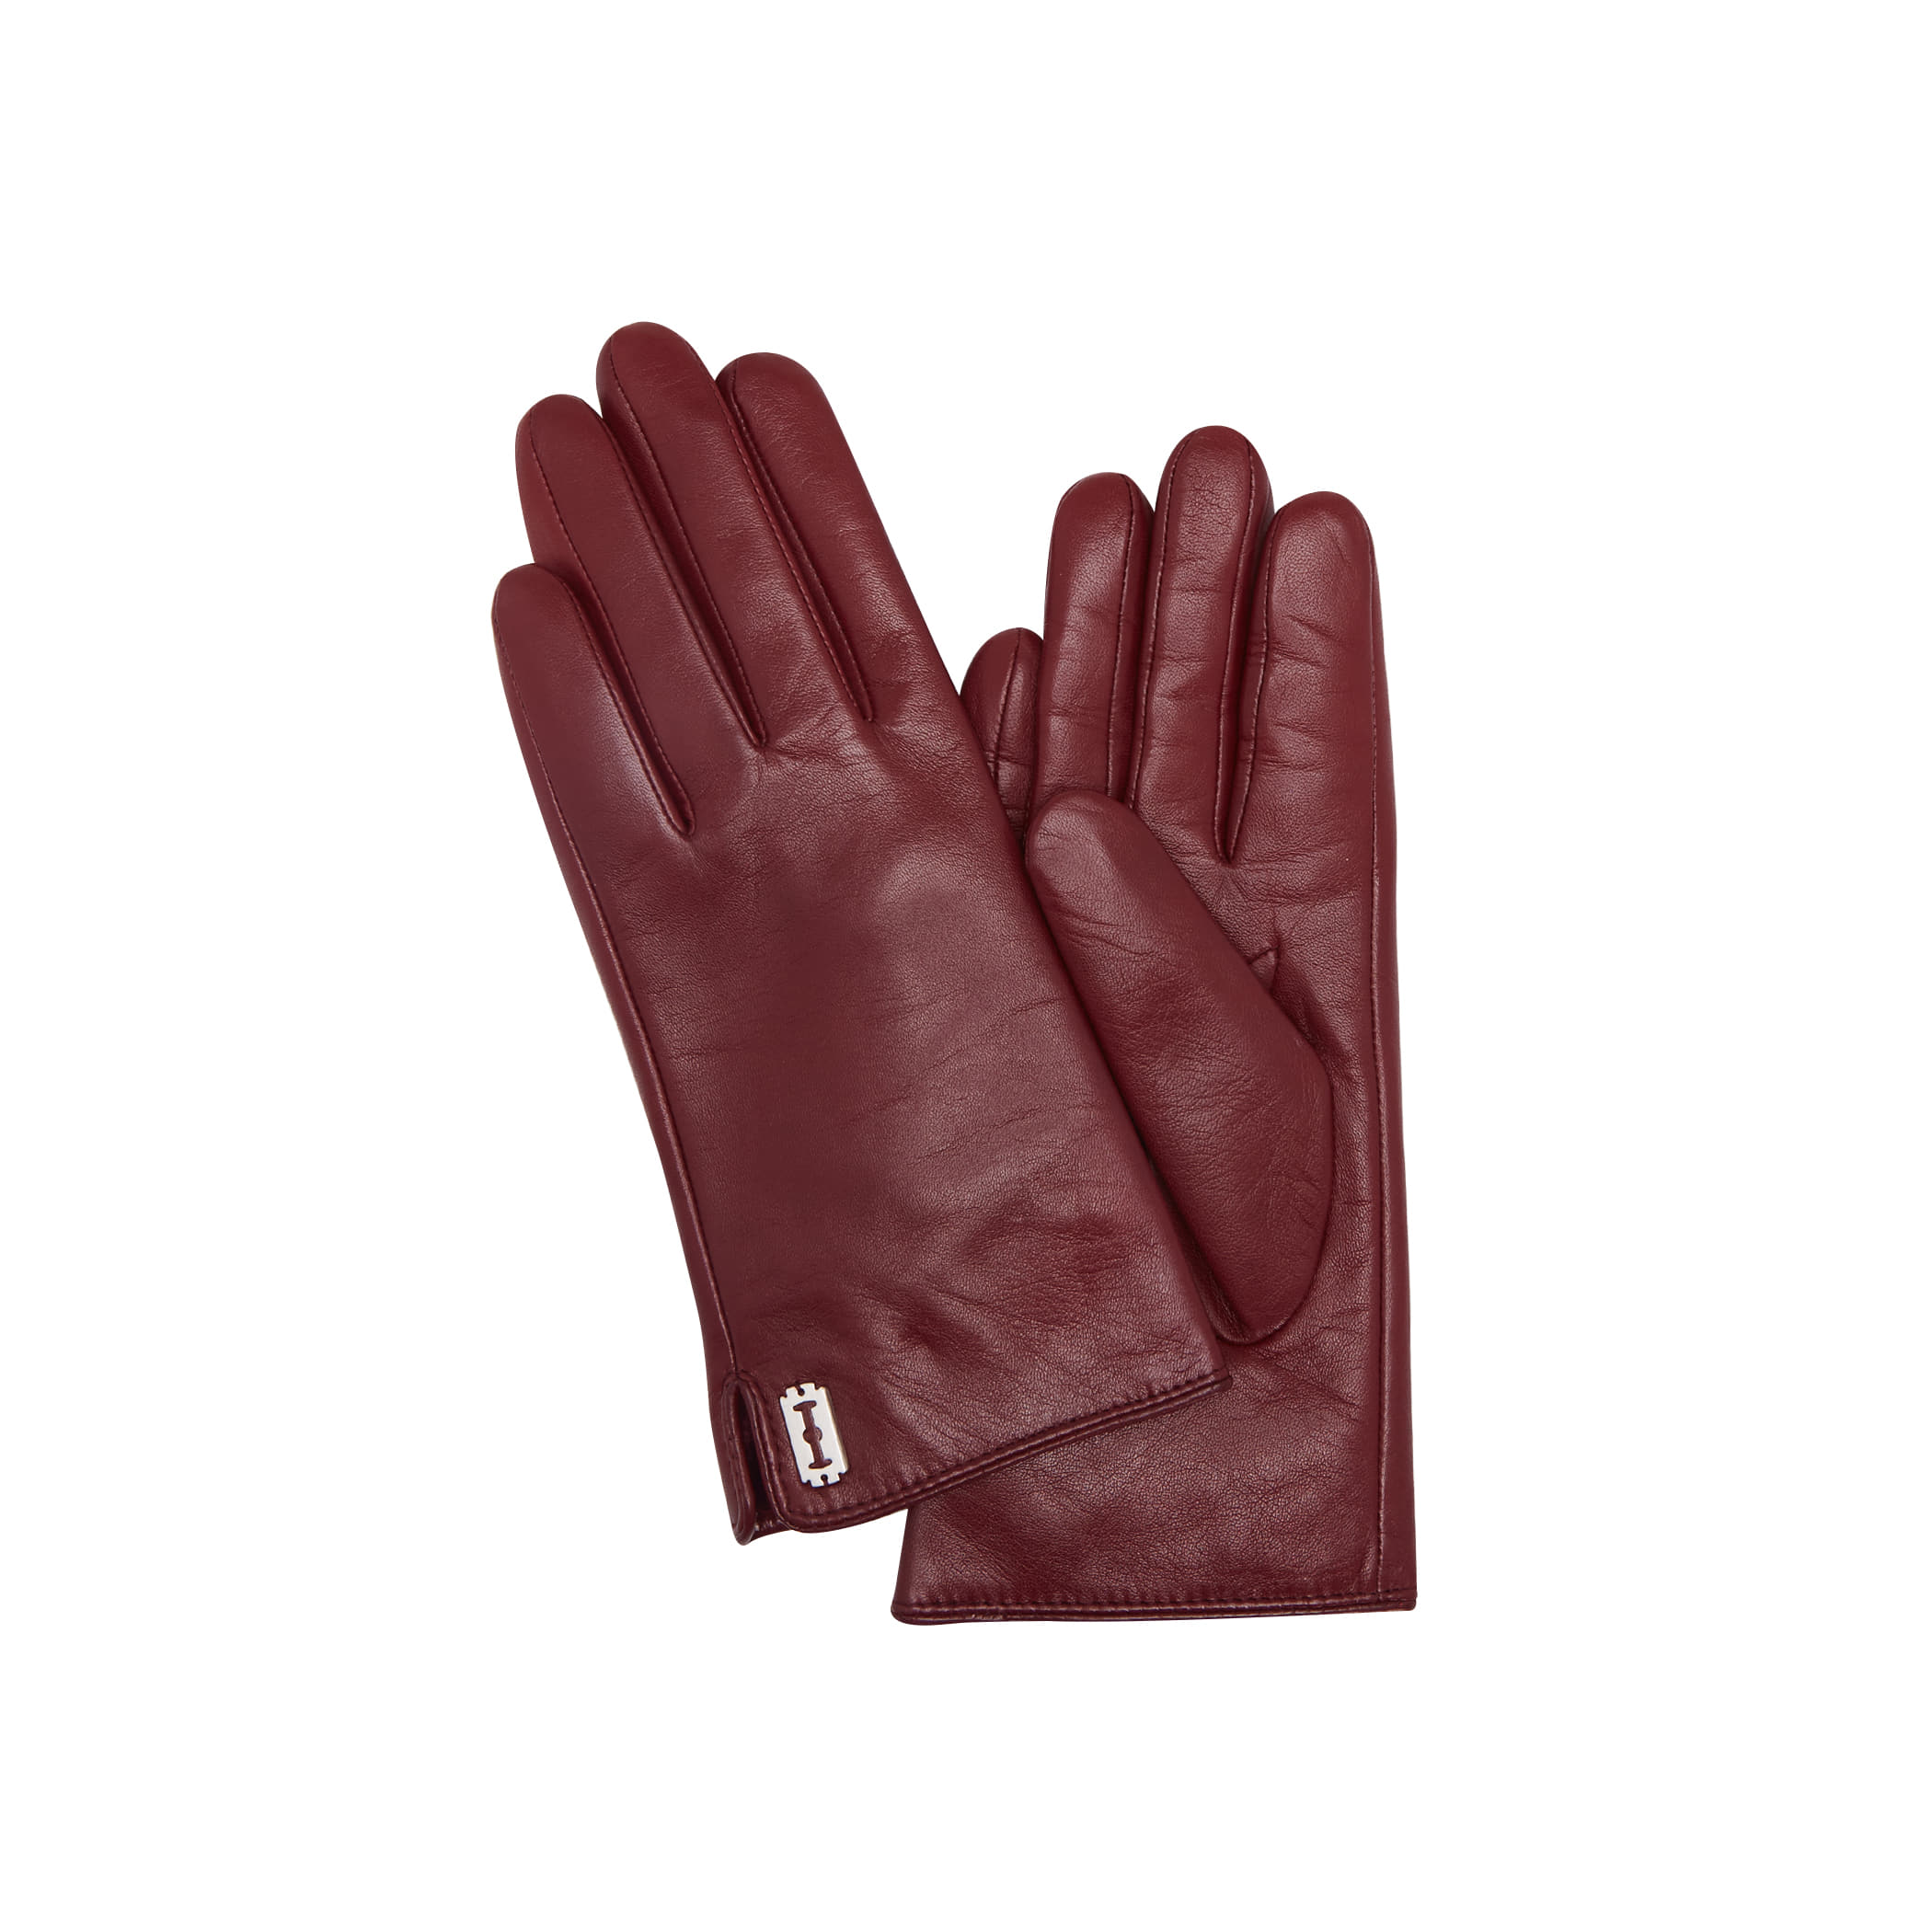 Toque Leather Gloves (토크 레더 장갑) Wine